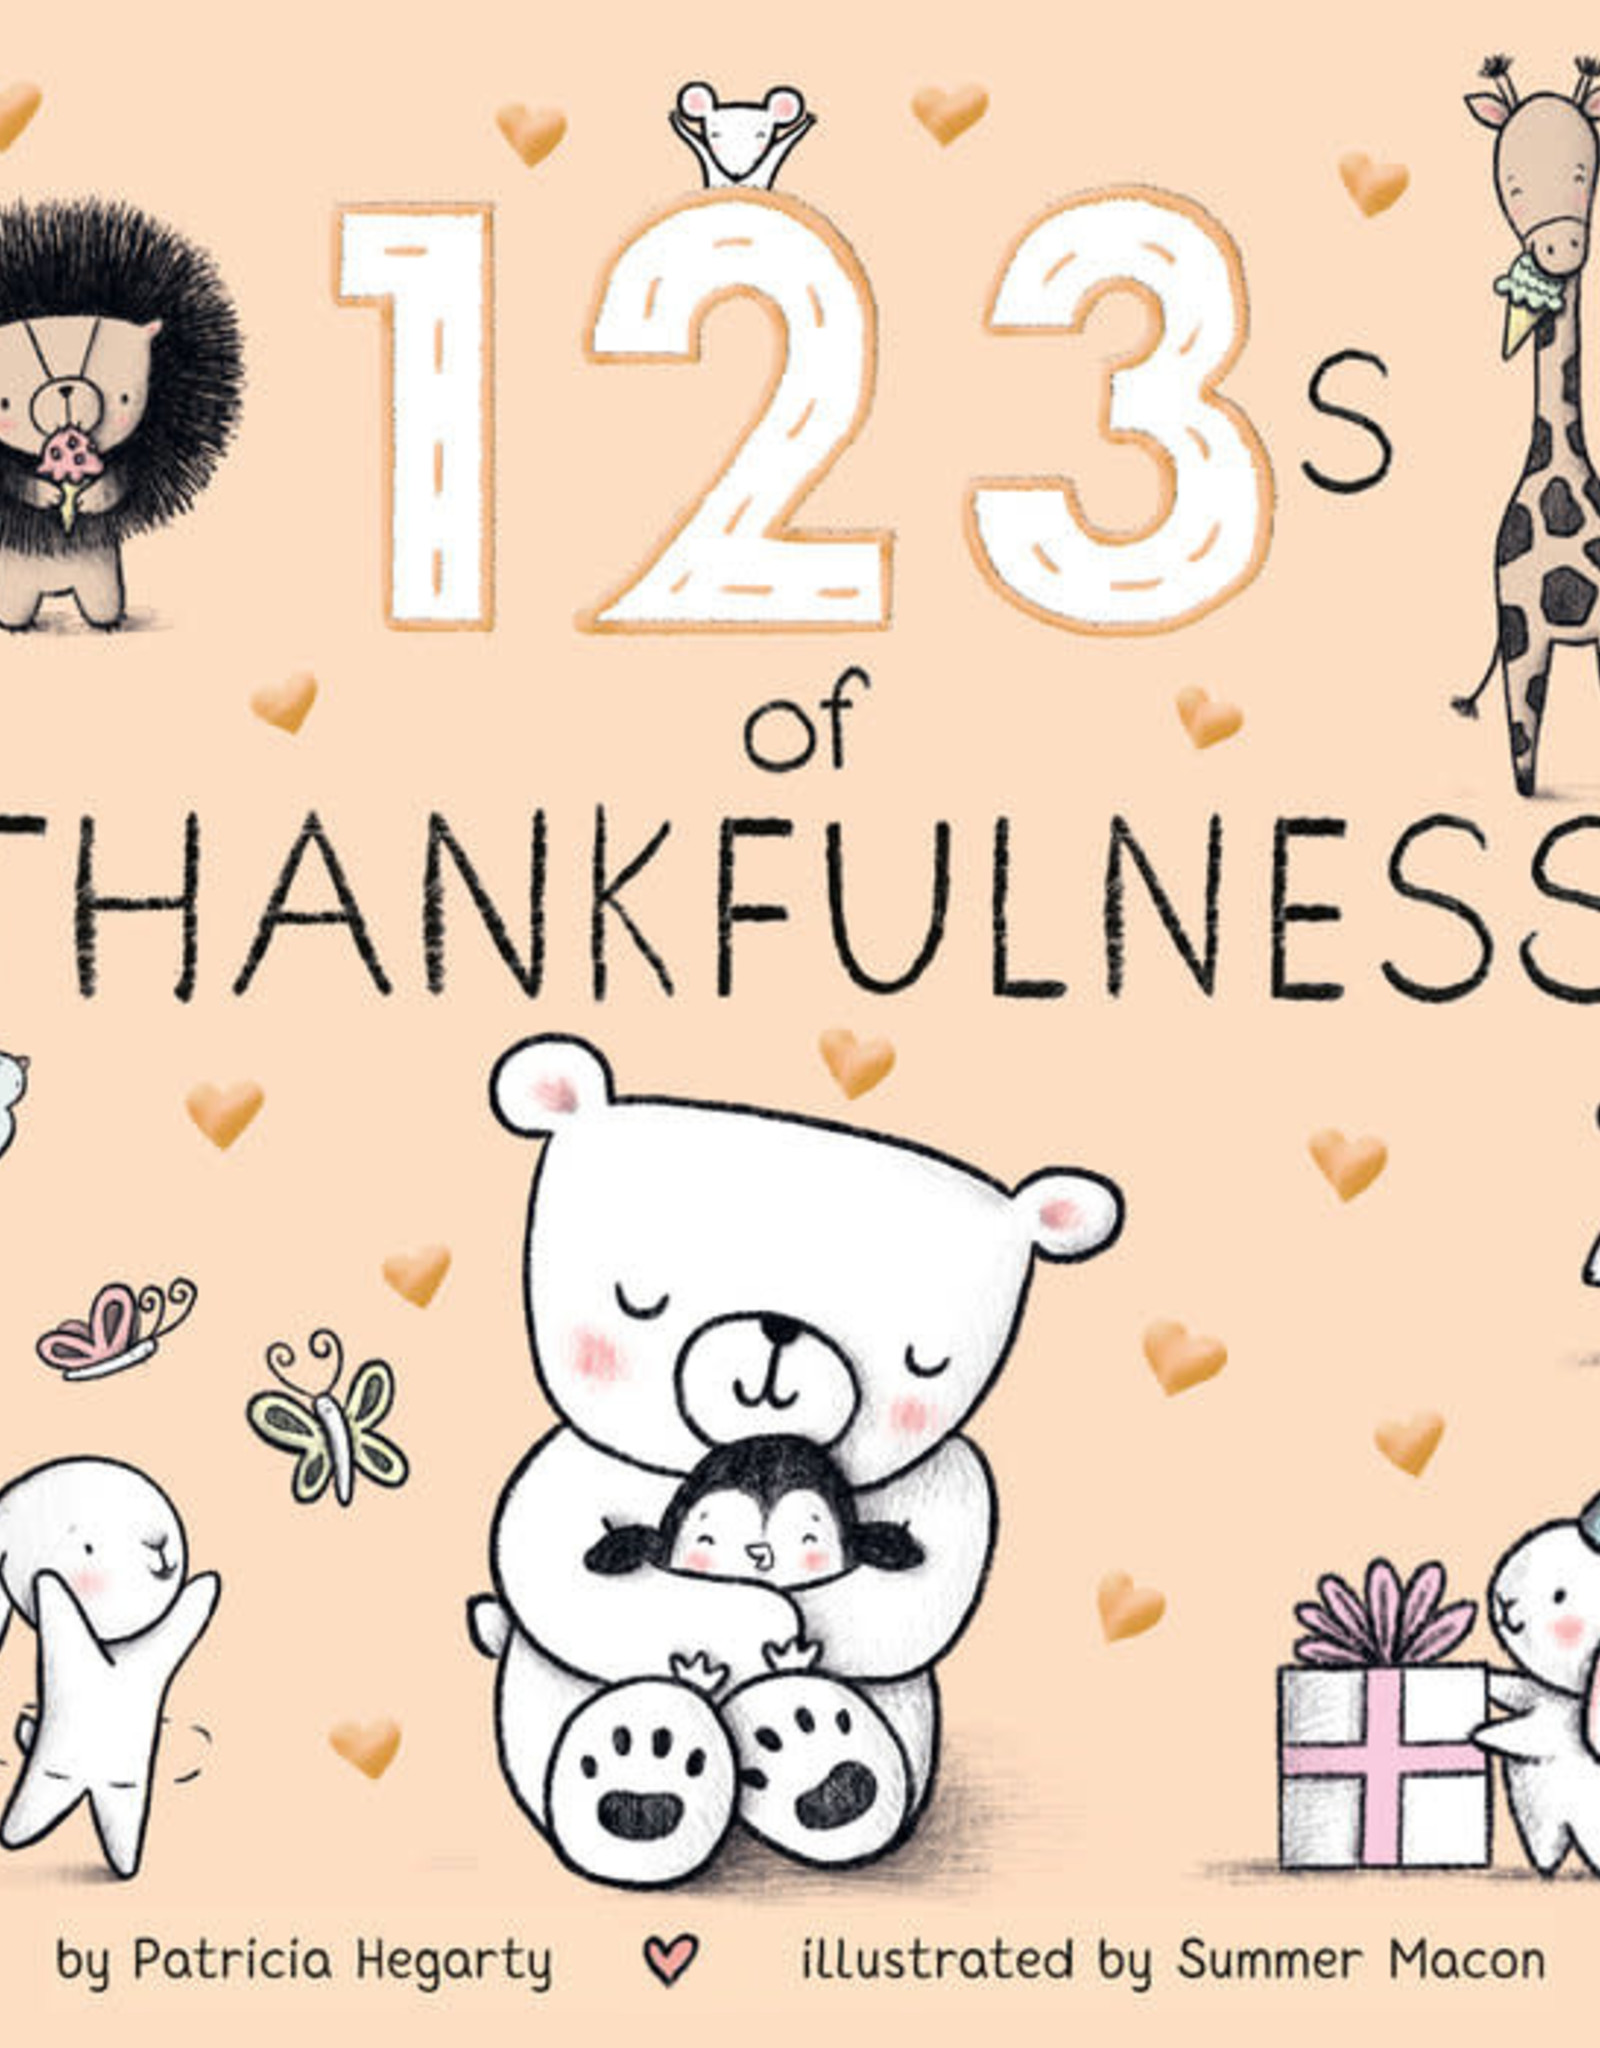 Penguin Random House 123s of Thankfulness